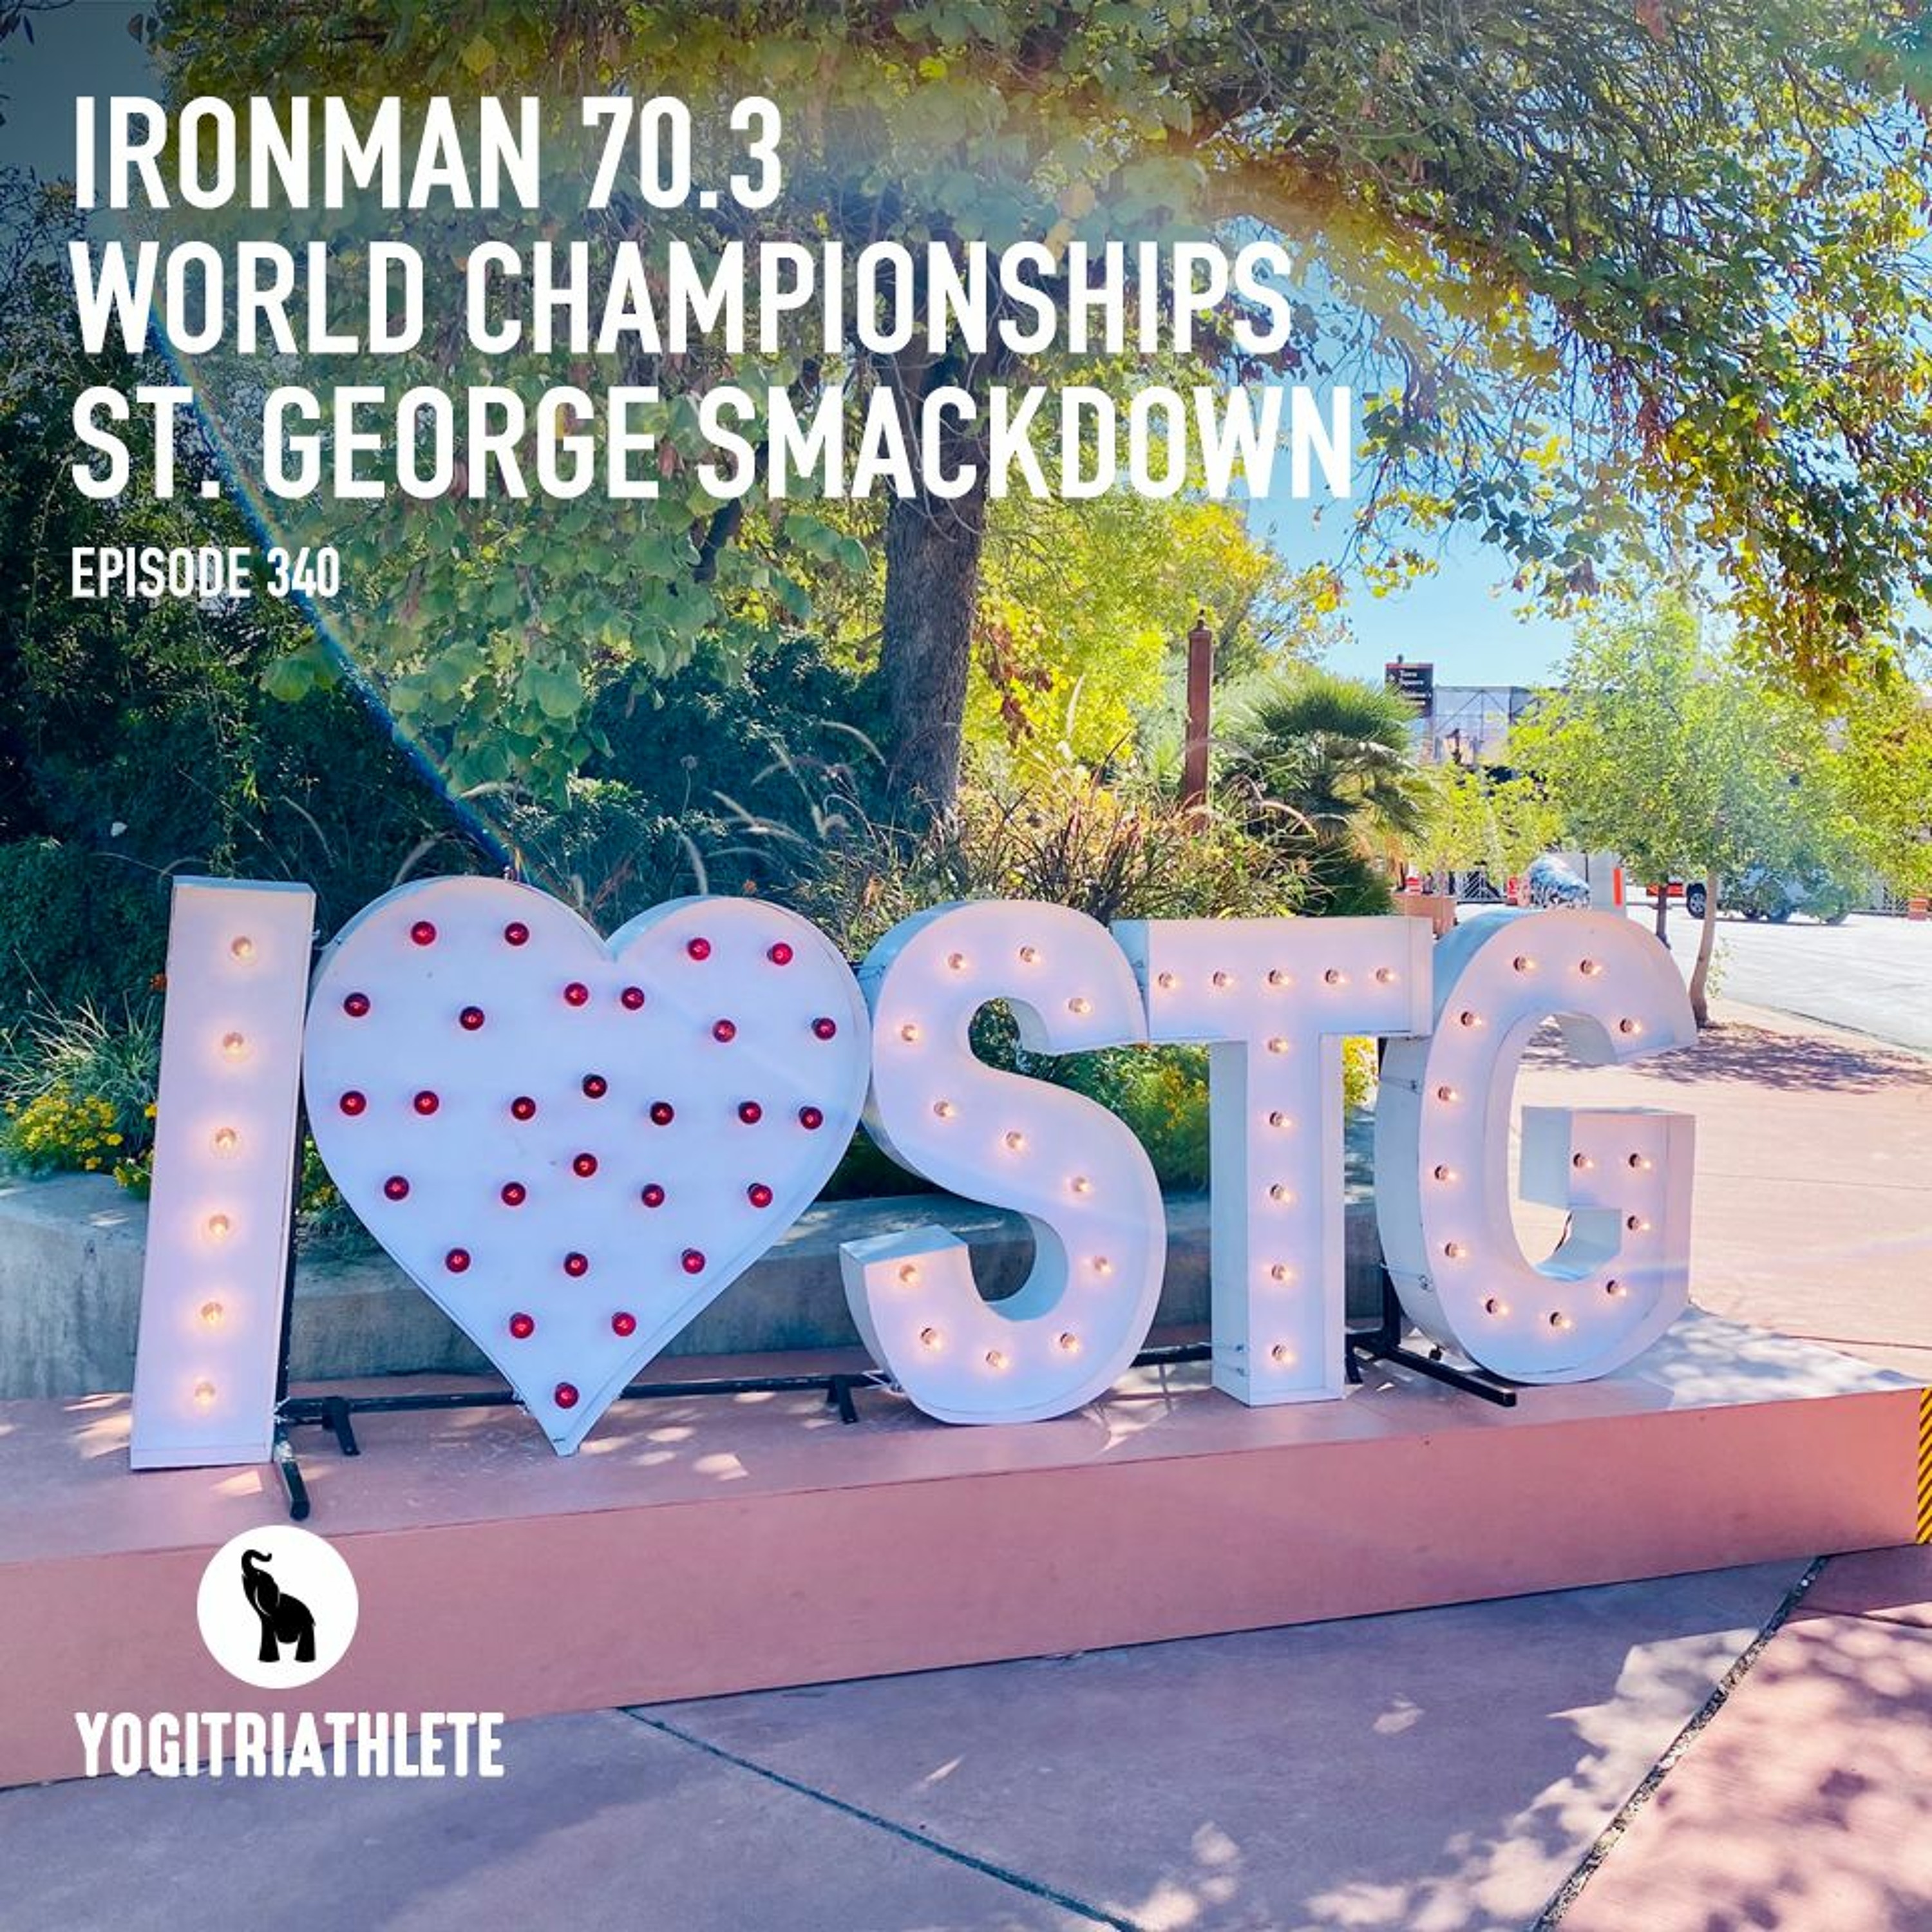 Ironman 70.3 World Championship - St. George Smackdown